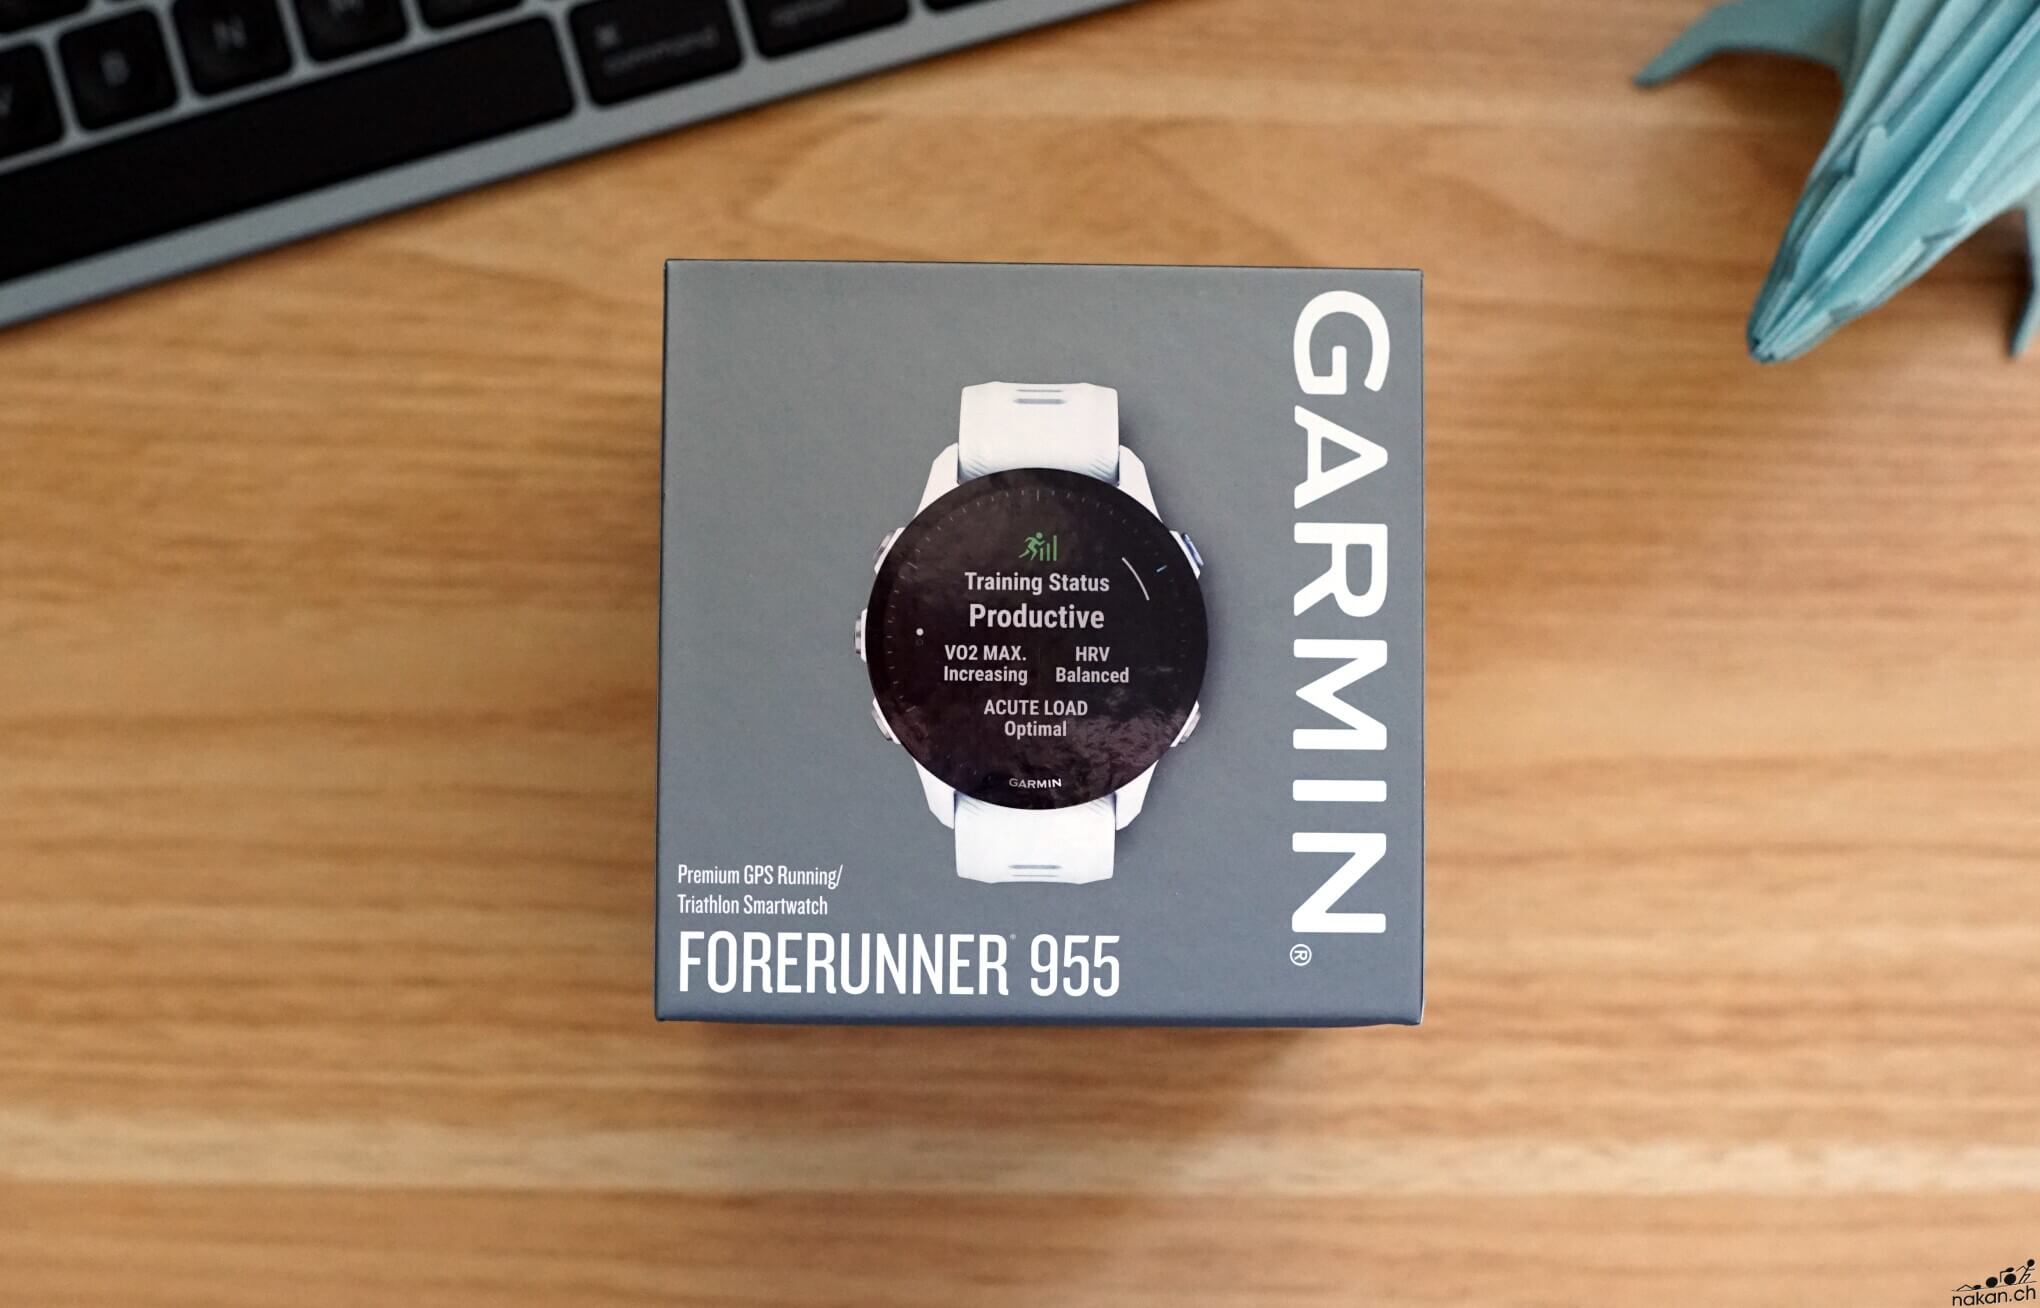 La Garmin Forerunner 955 testée de fond en comble 